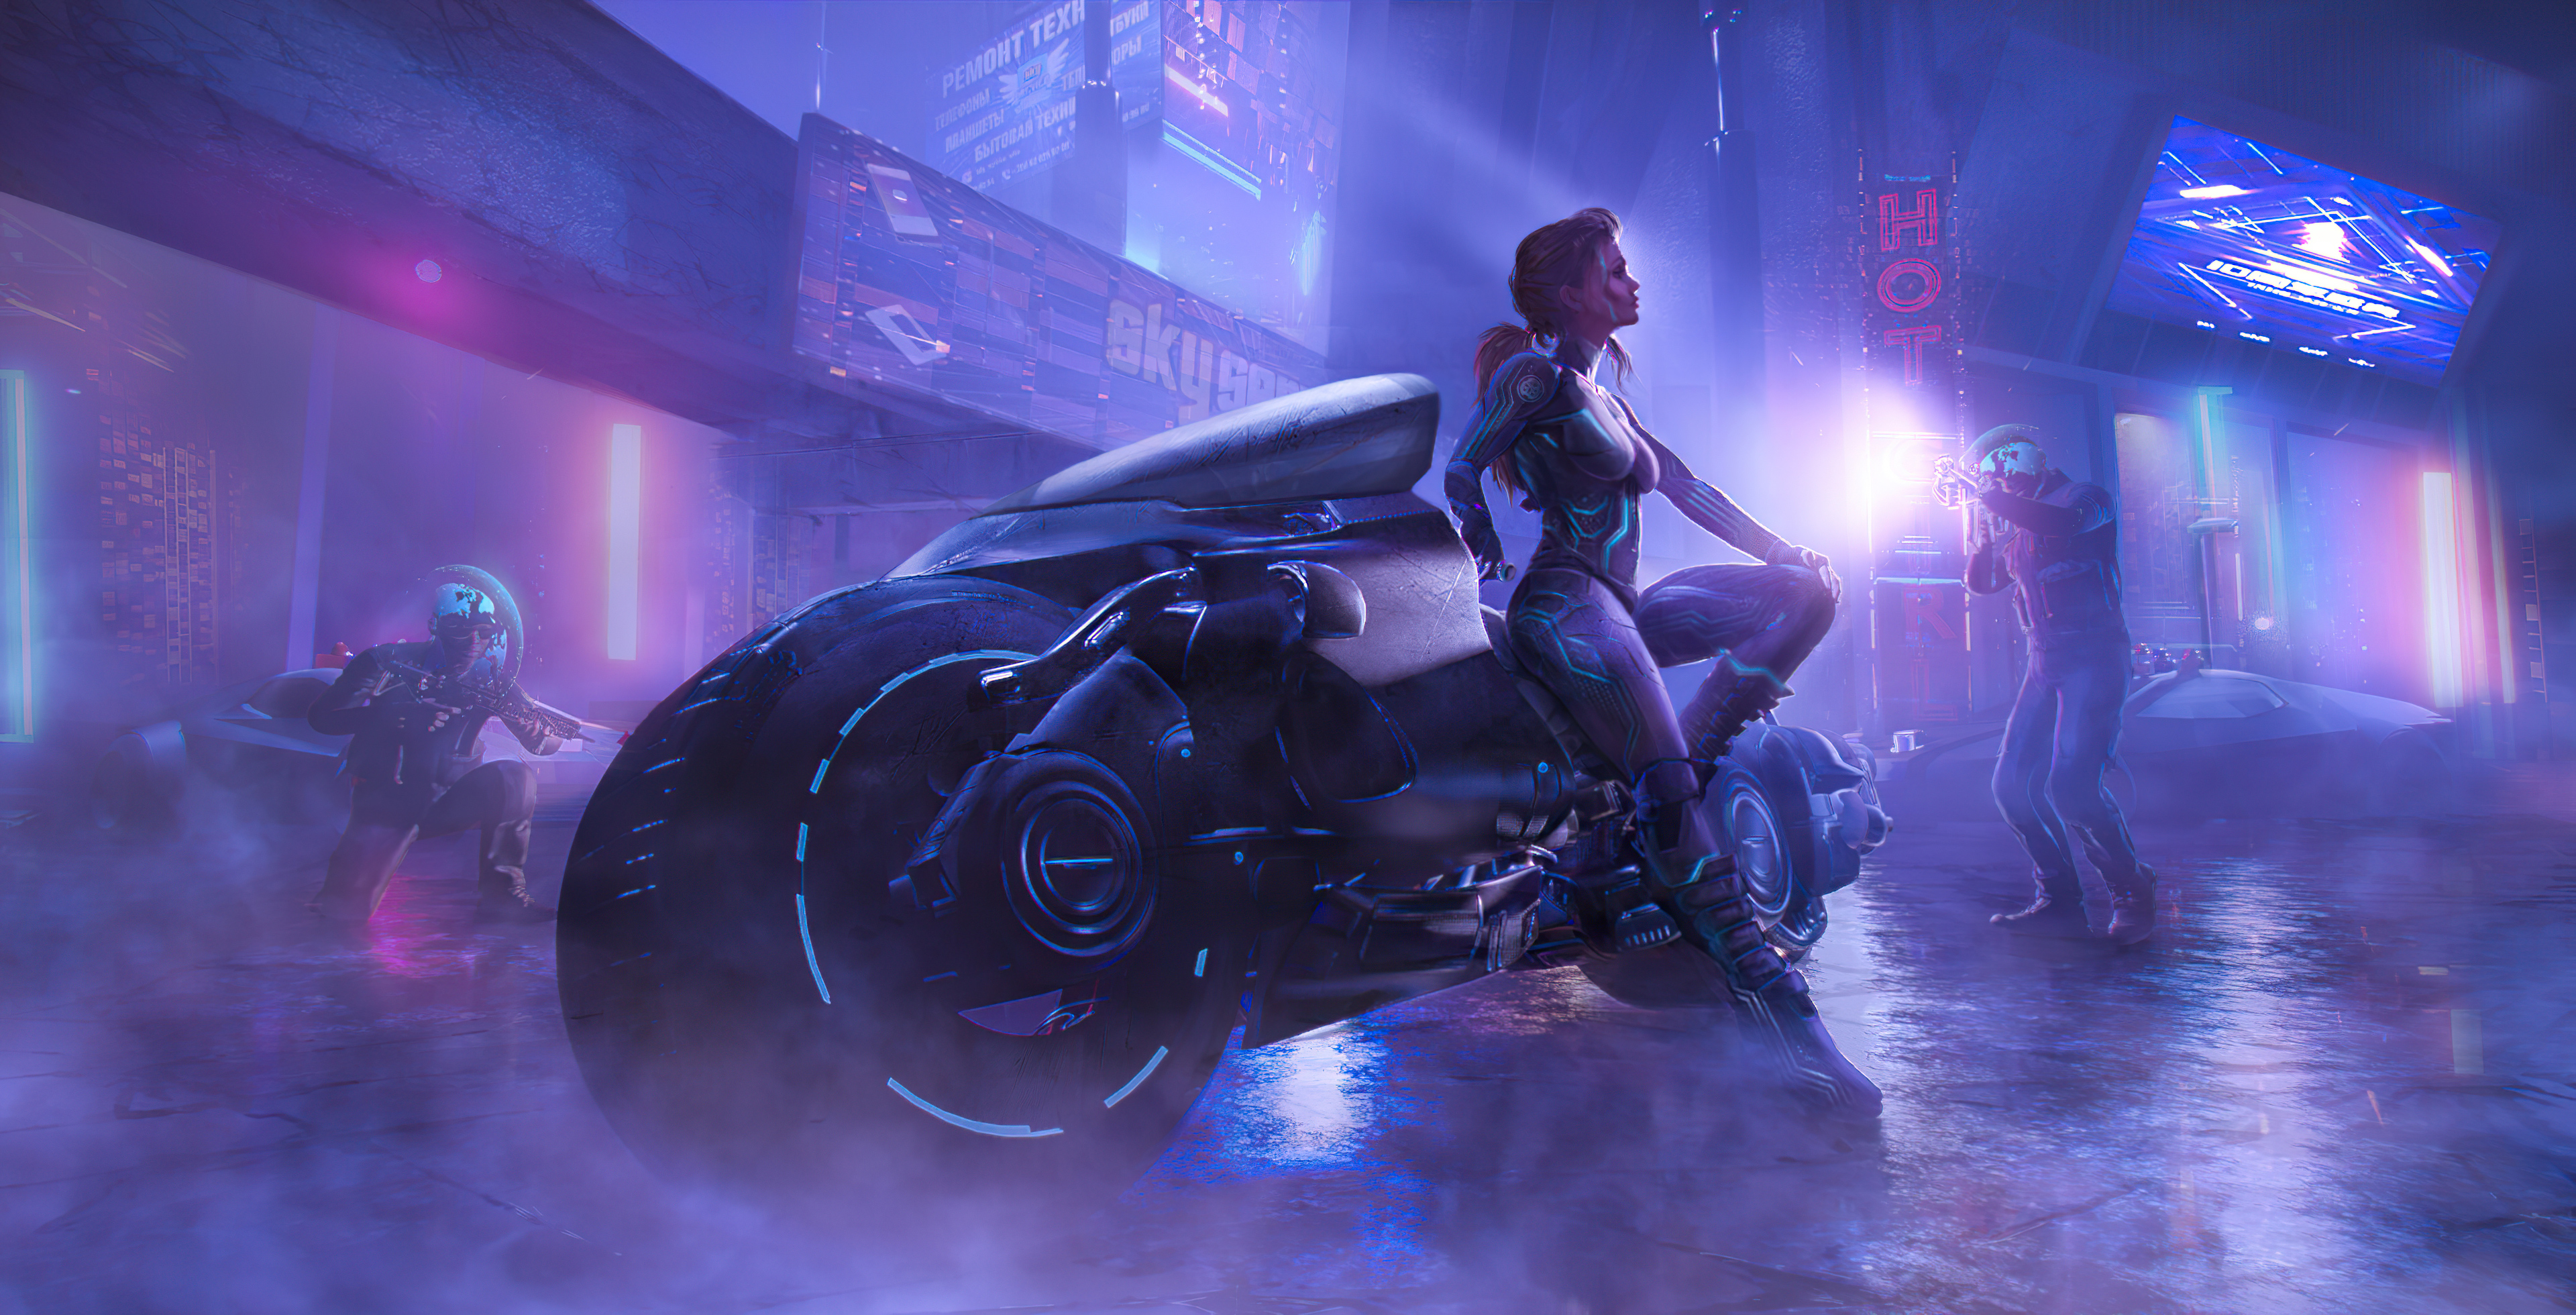 General 3840x1960 science fiction women 4K digital art artwork cyberpunk exosuit boob pockets smoke motorcycle women with motorcycles hotel neon gun aiming ponytail profile